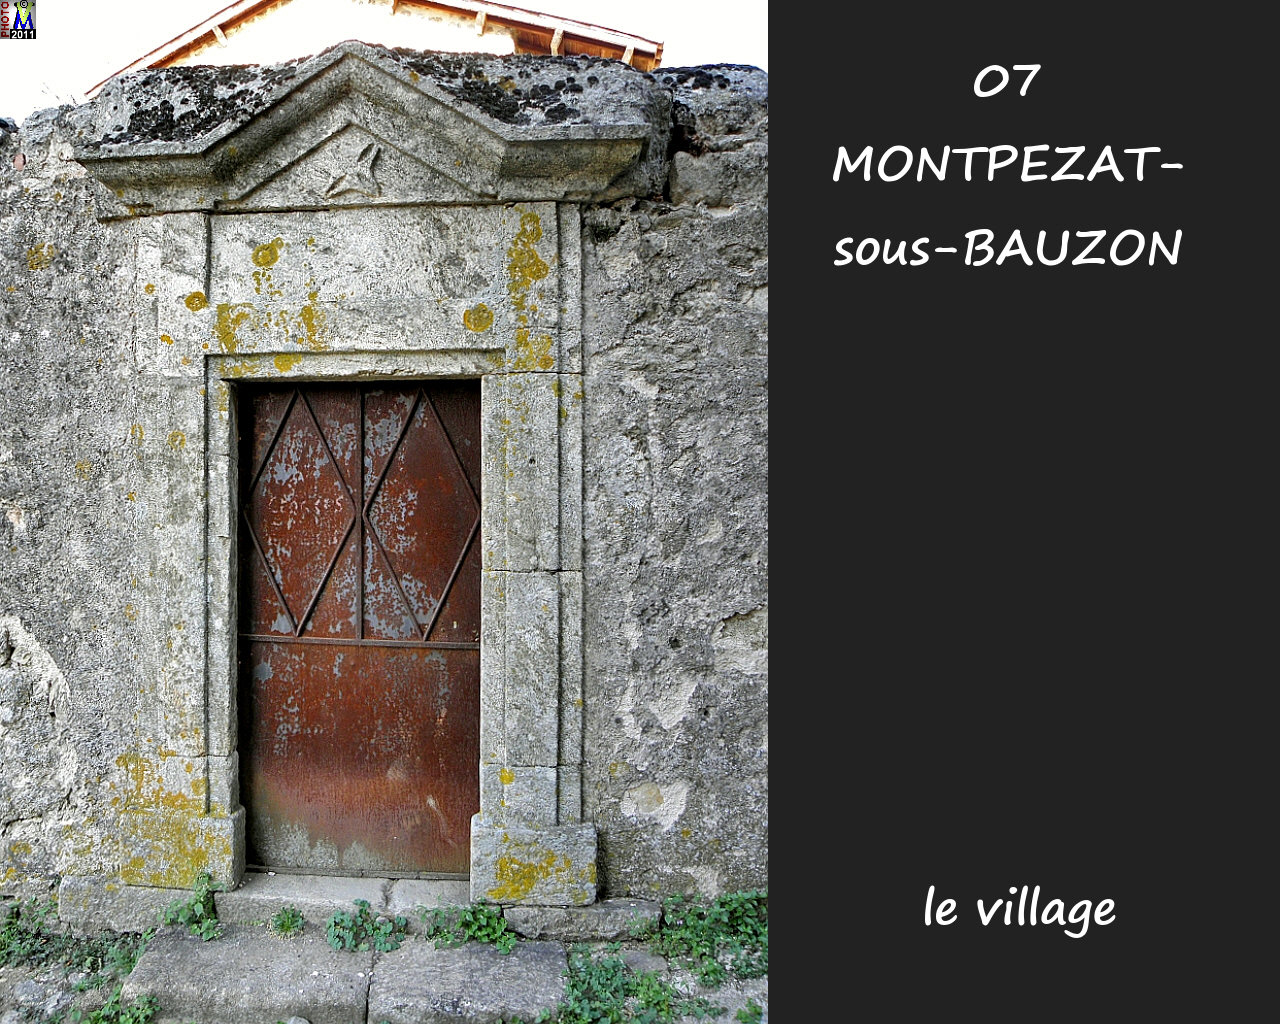 07MONTPEZAT-BAUZON_village_134.jpg